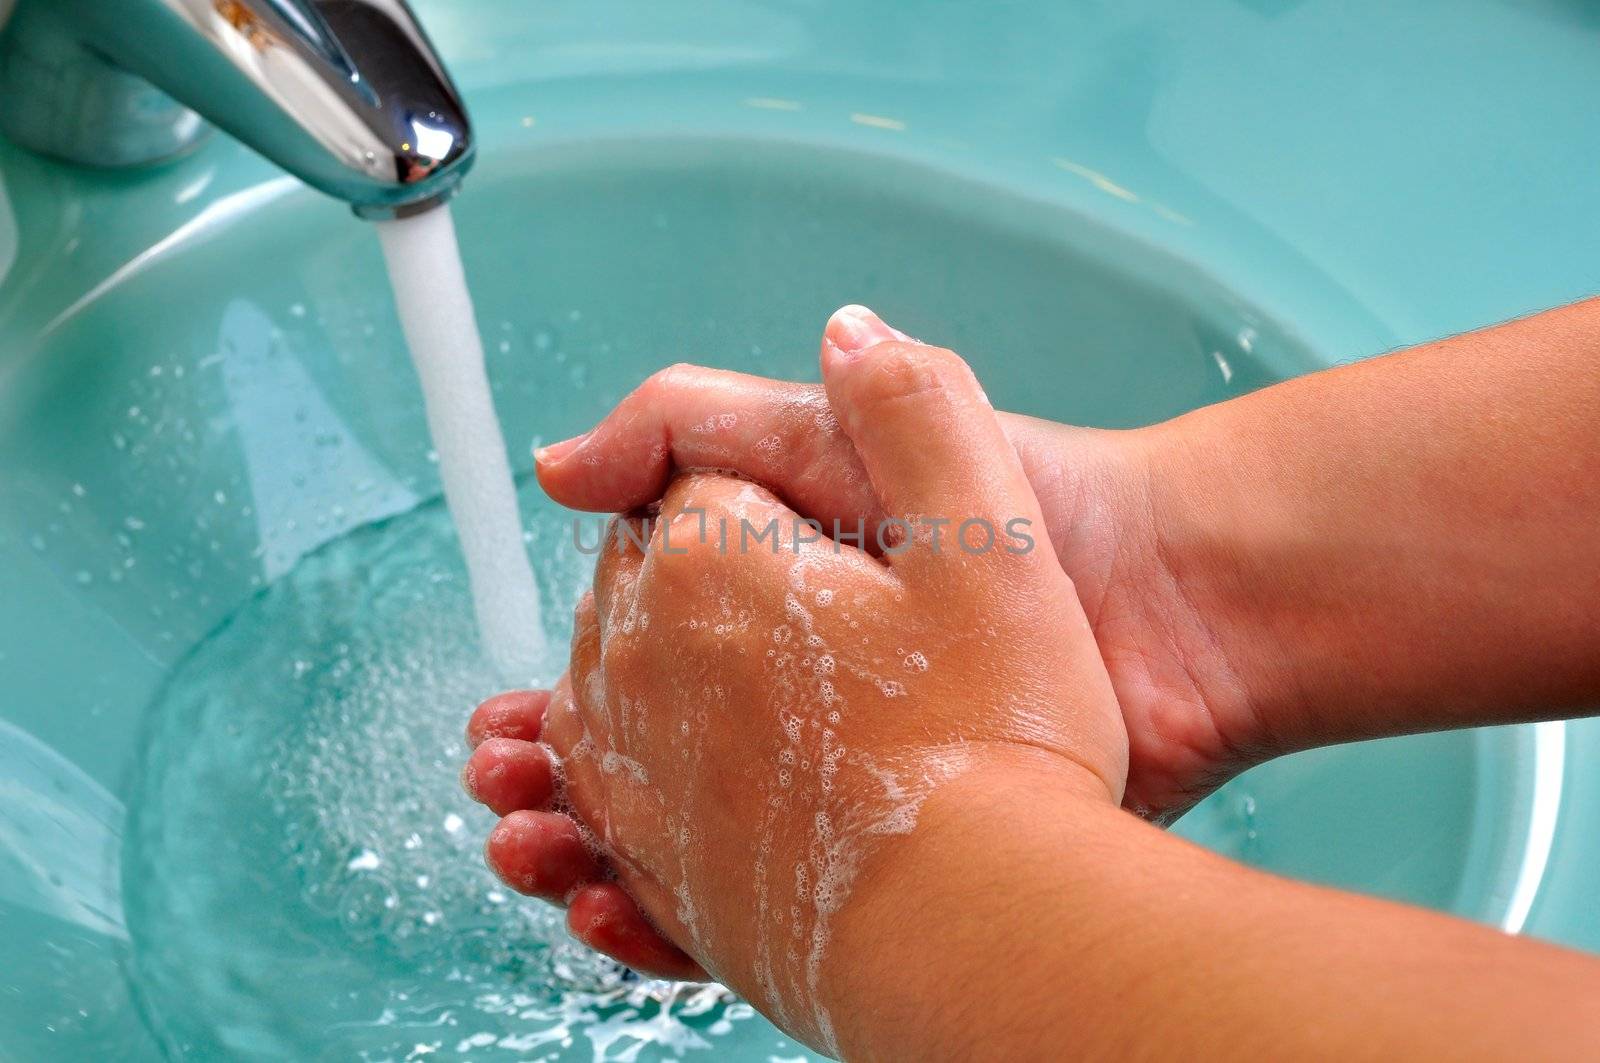 Washing Hands by ruigsantos